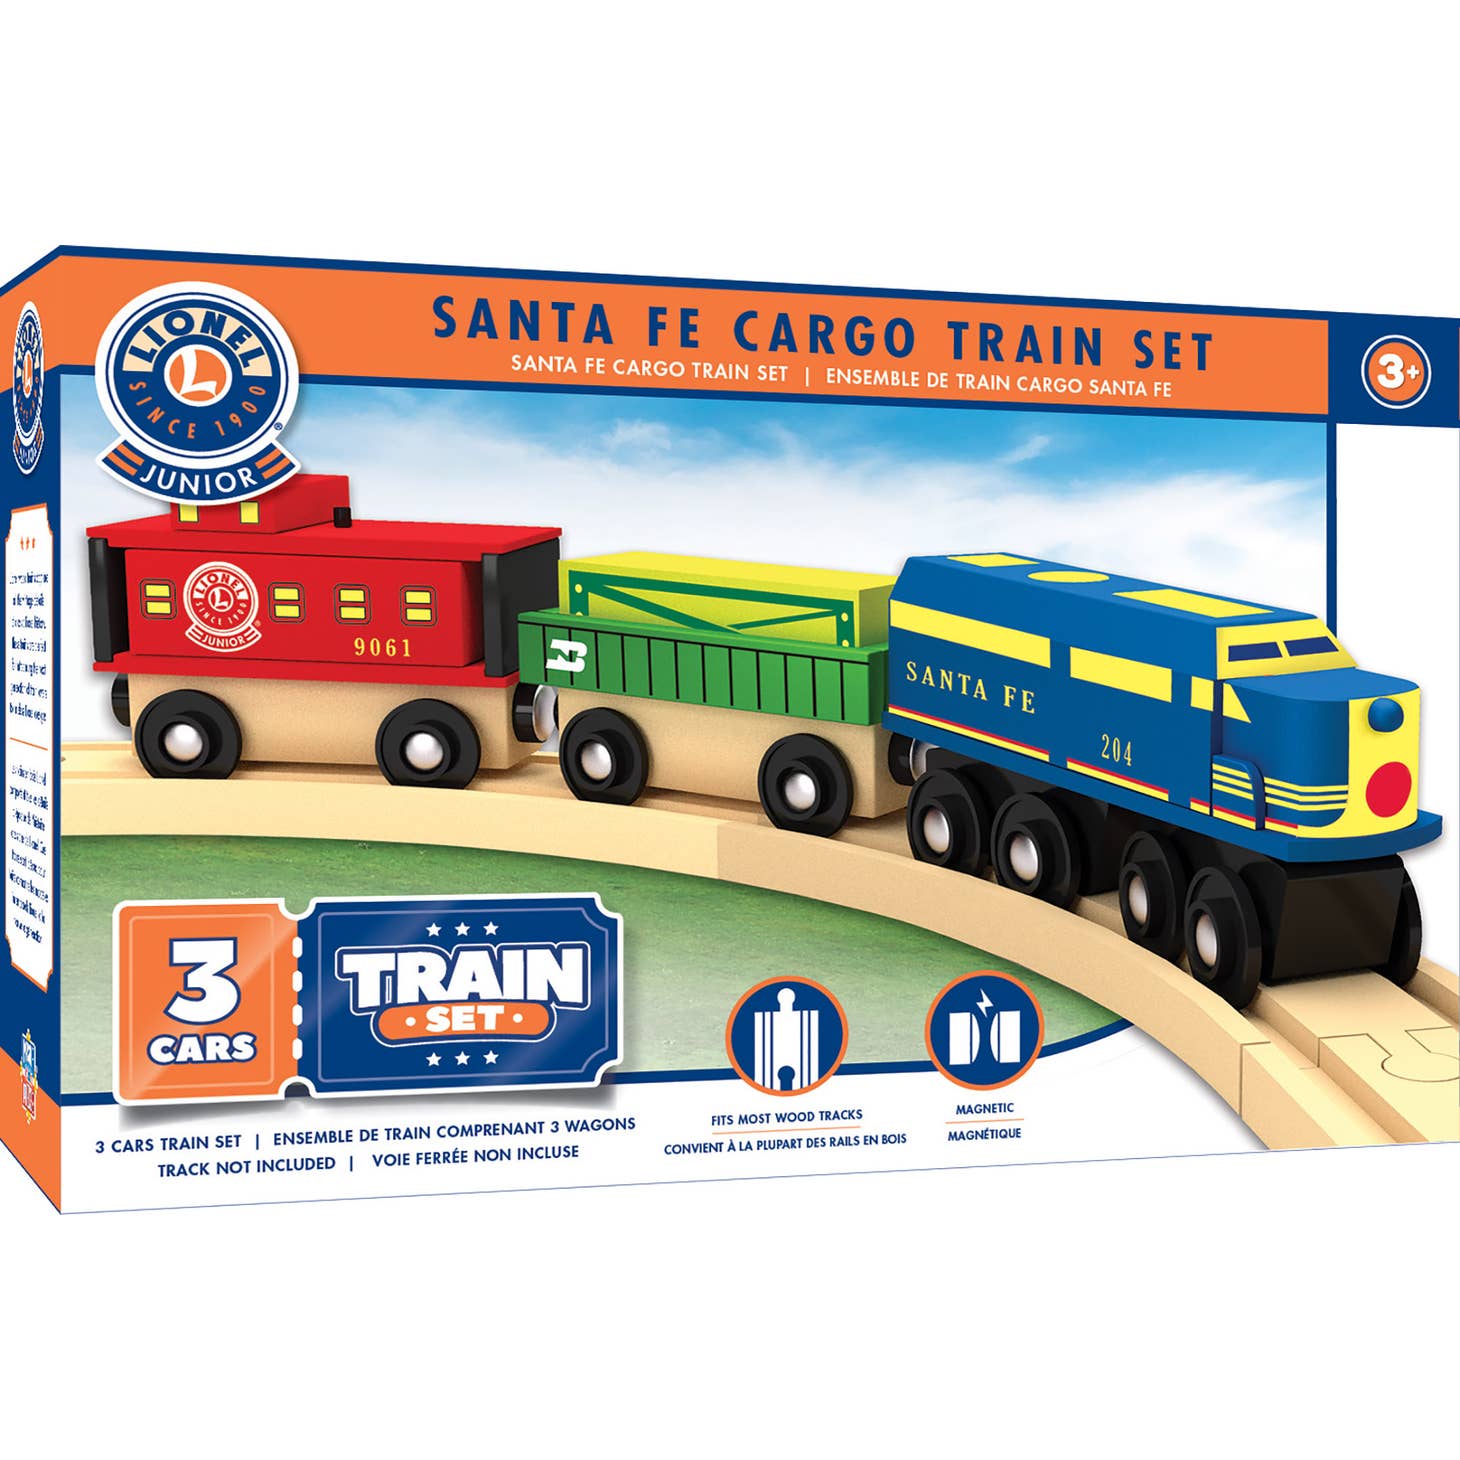 42018 Lionel - Santa Fe Cargo Toy Train Set